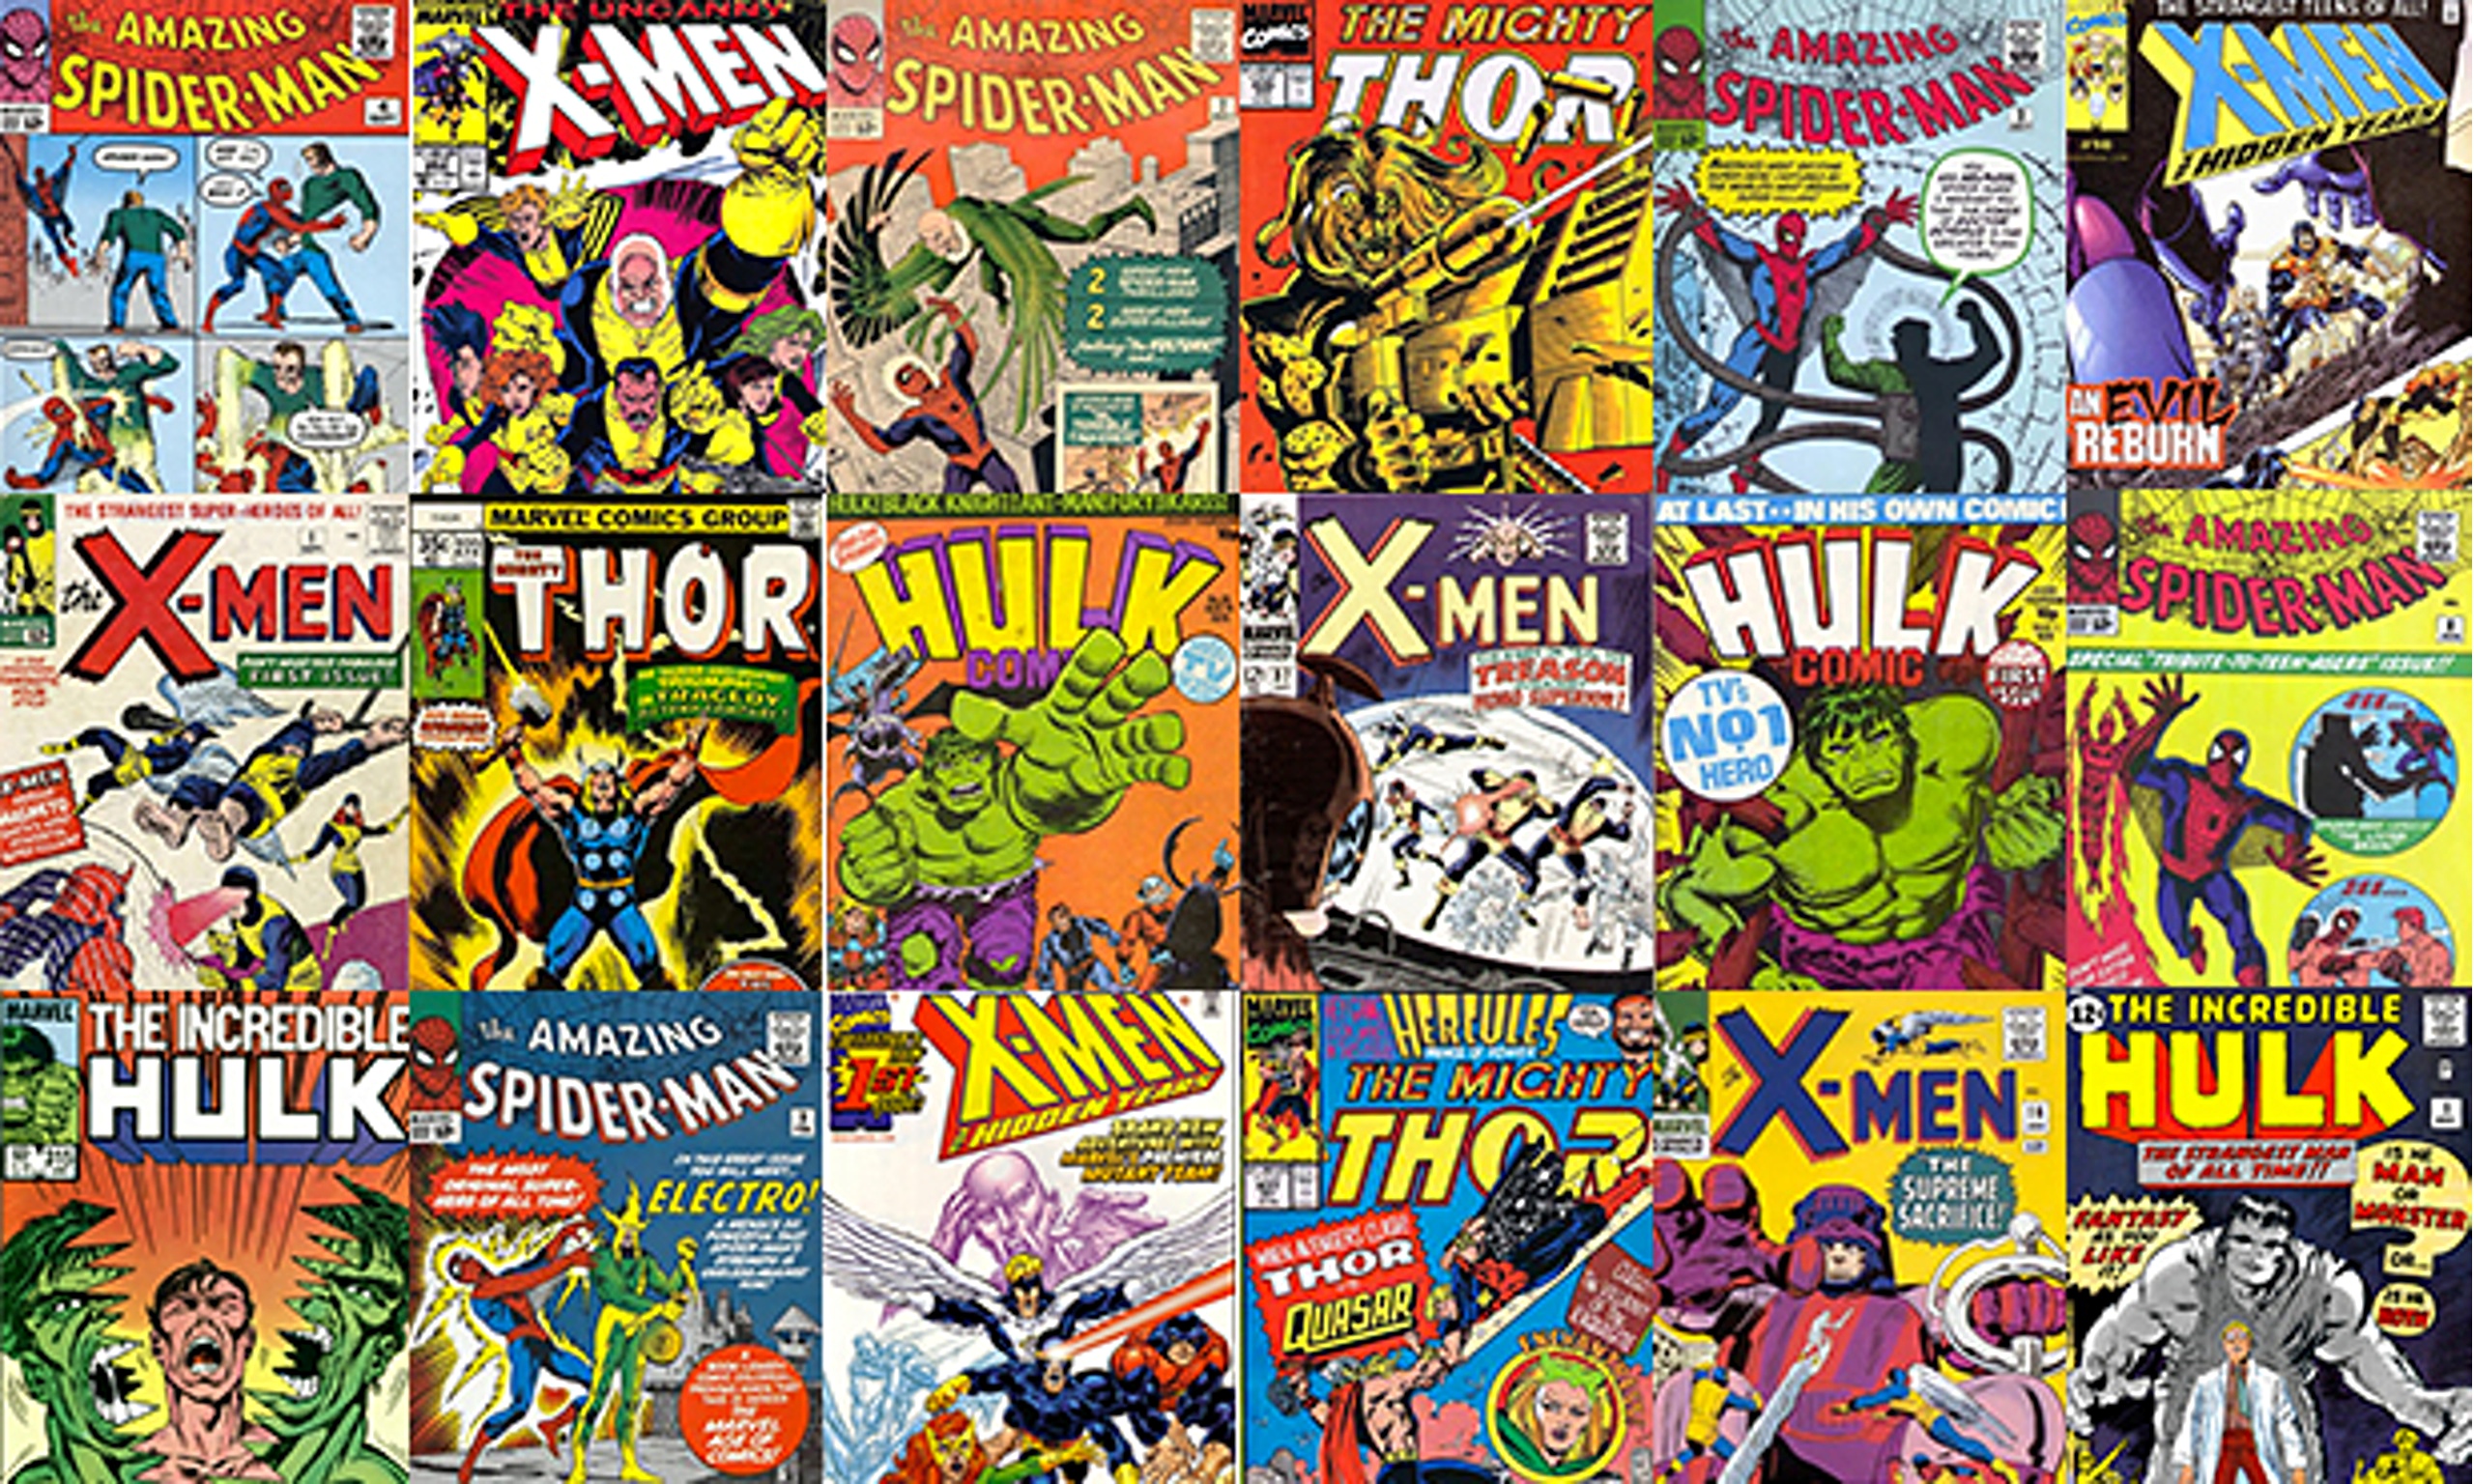 Al Murray: Why I love Marvel comics | Books | The Guardian